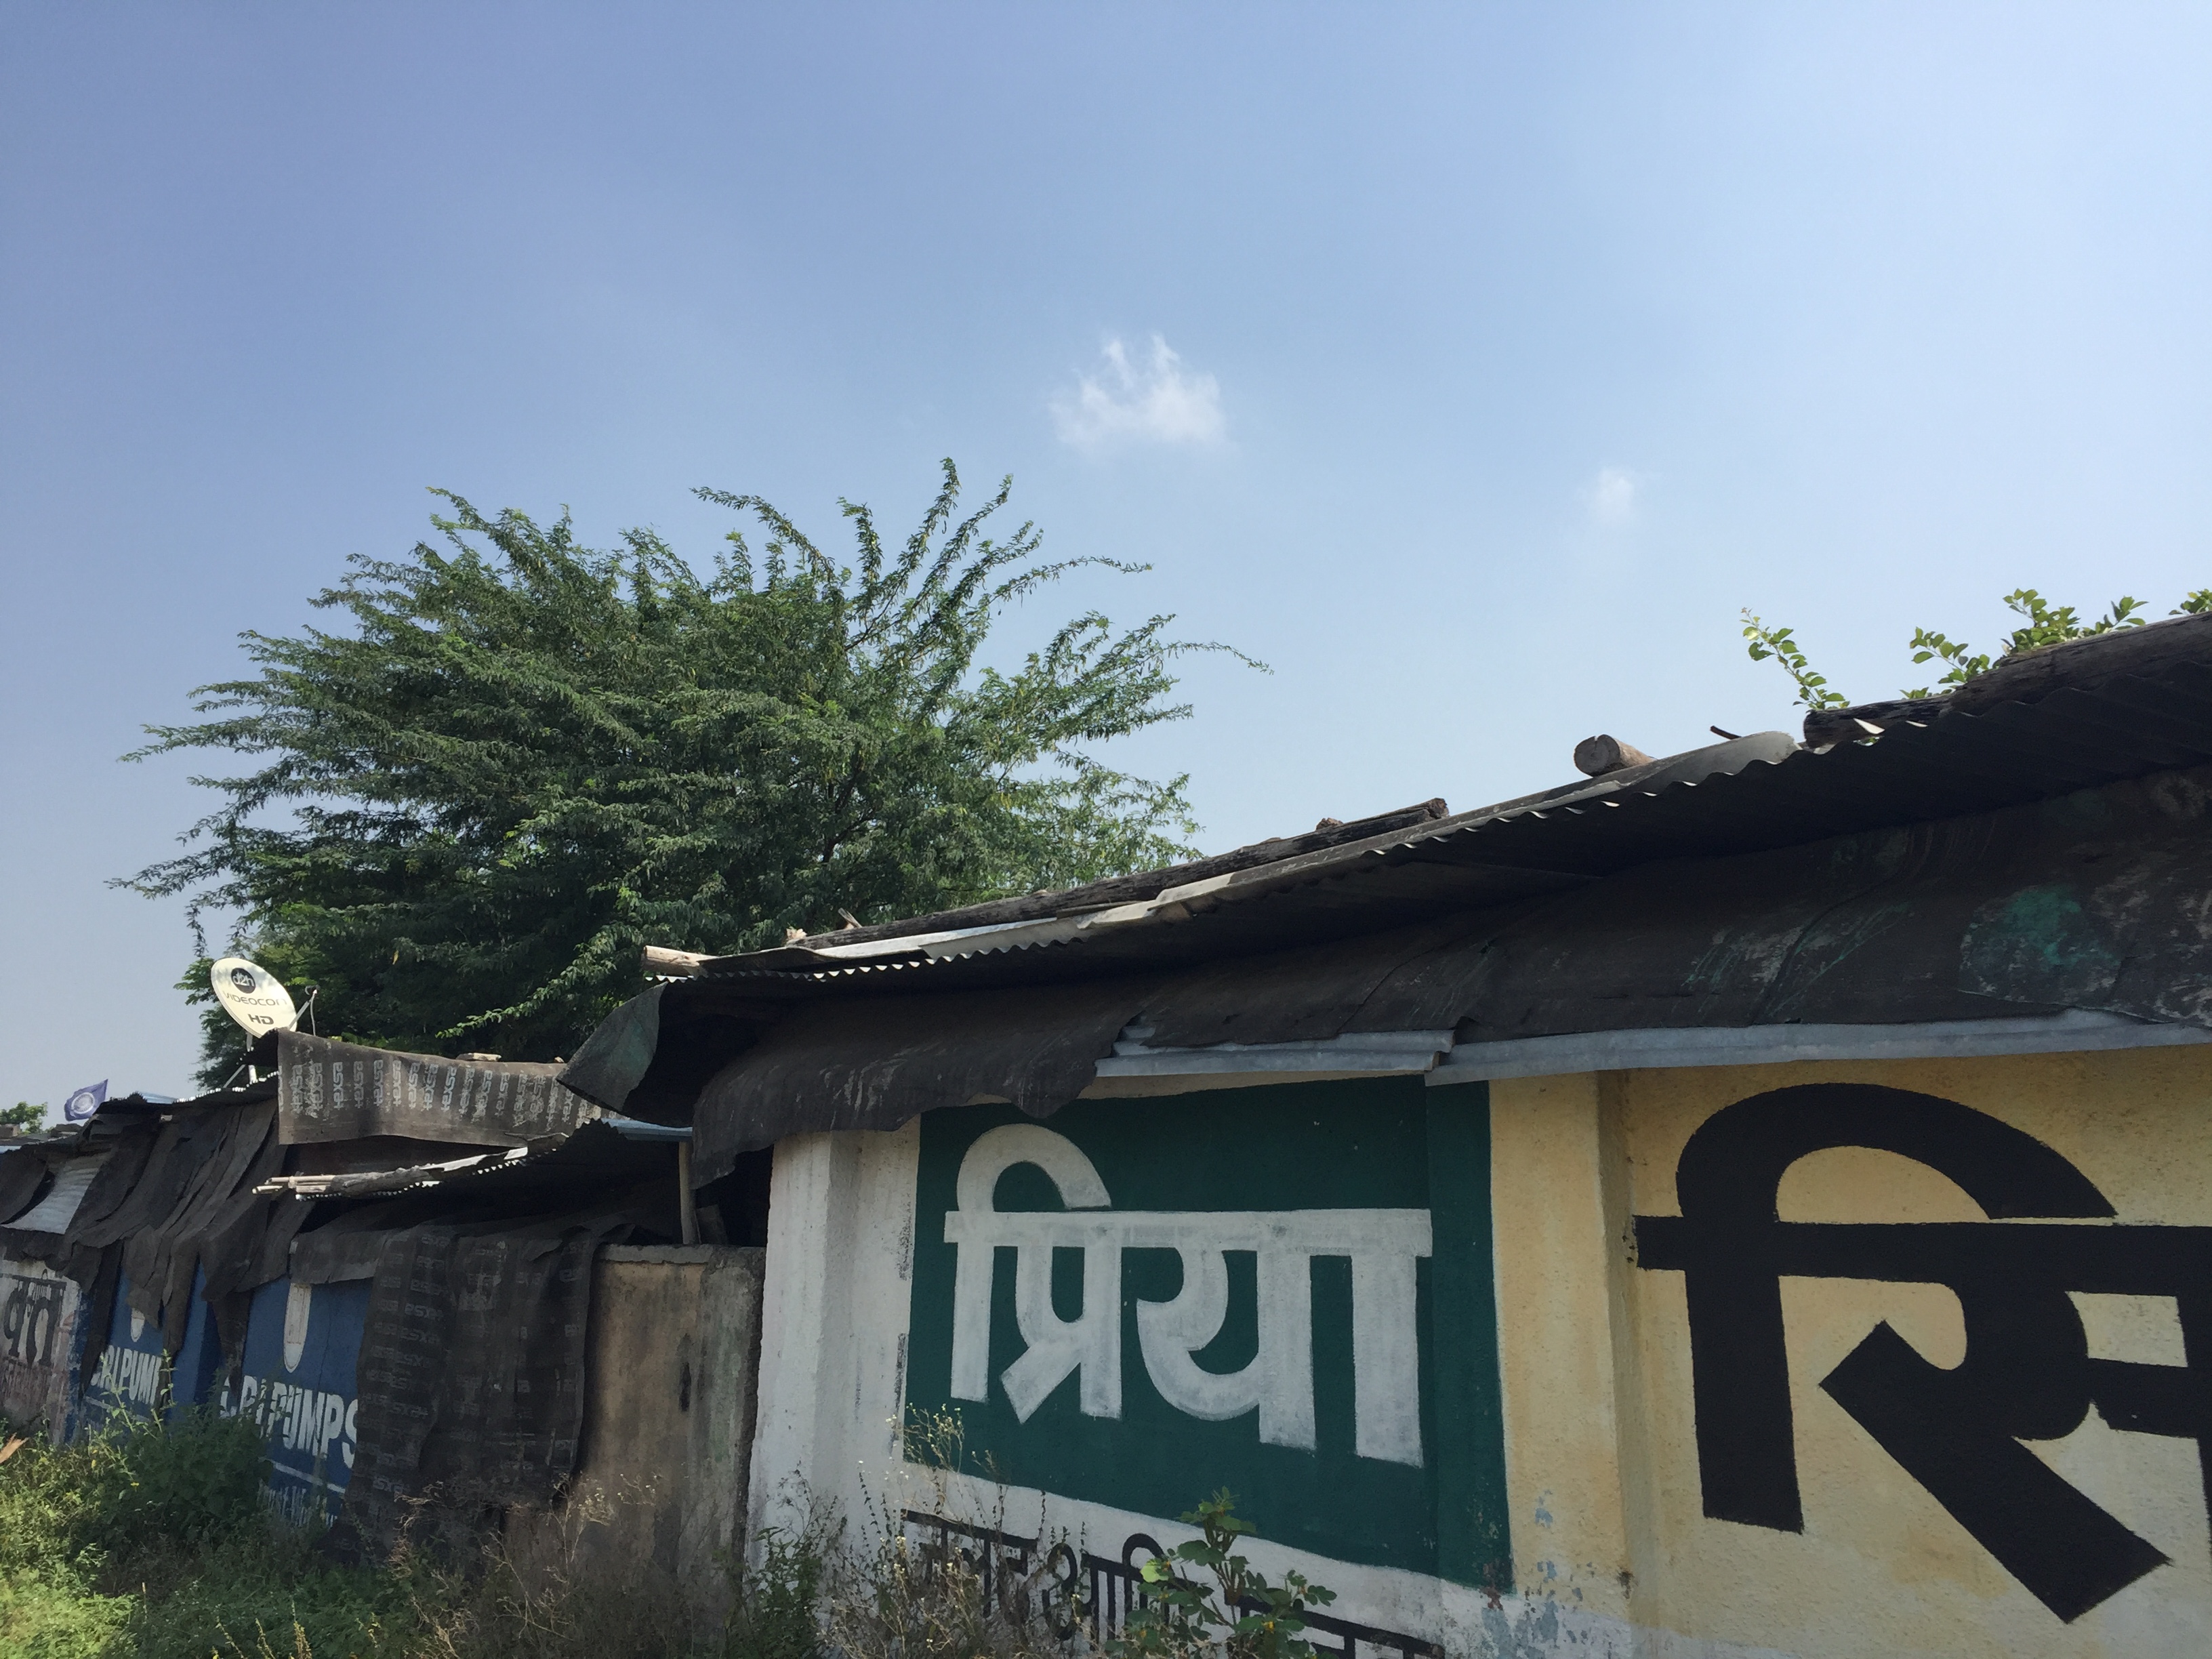 slum with satellite dish tells a story of India